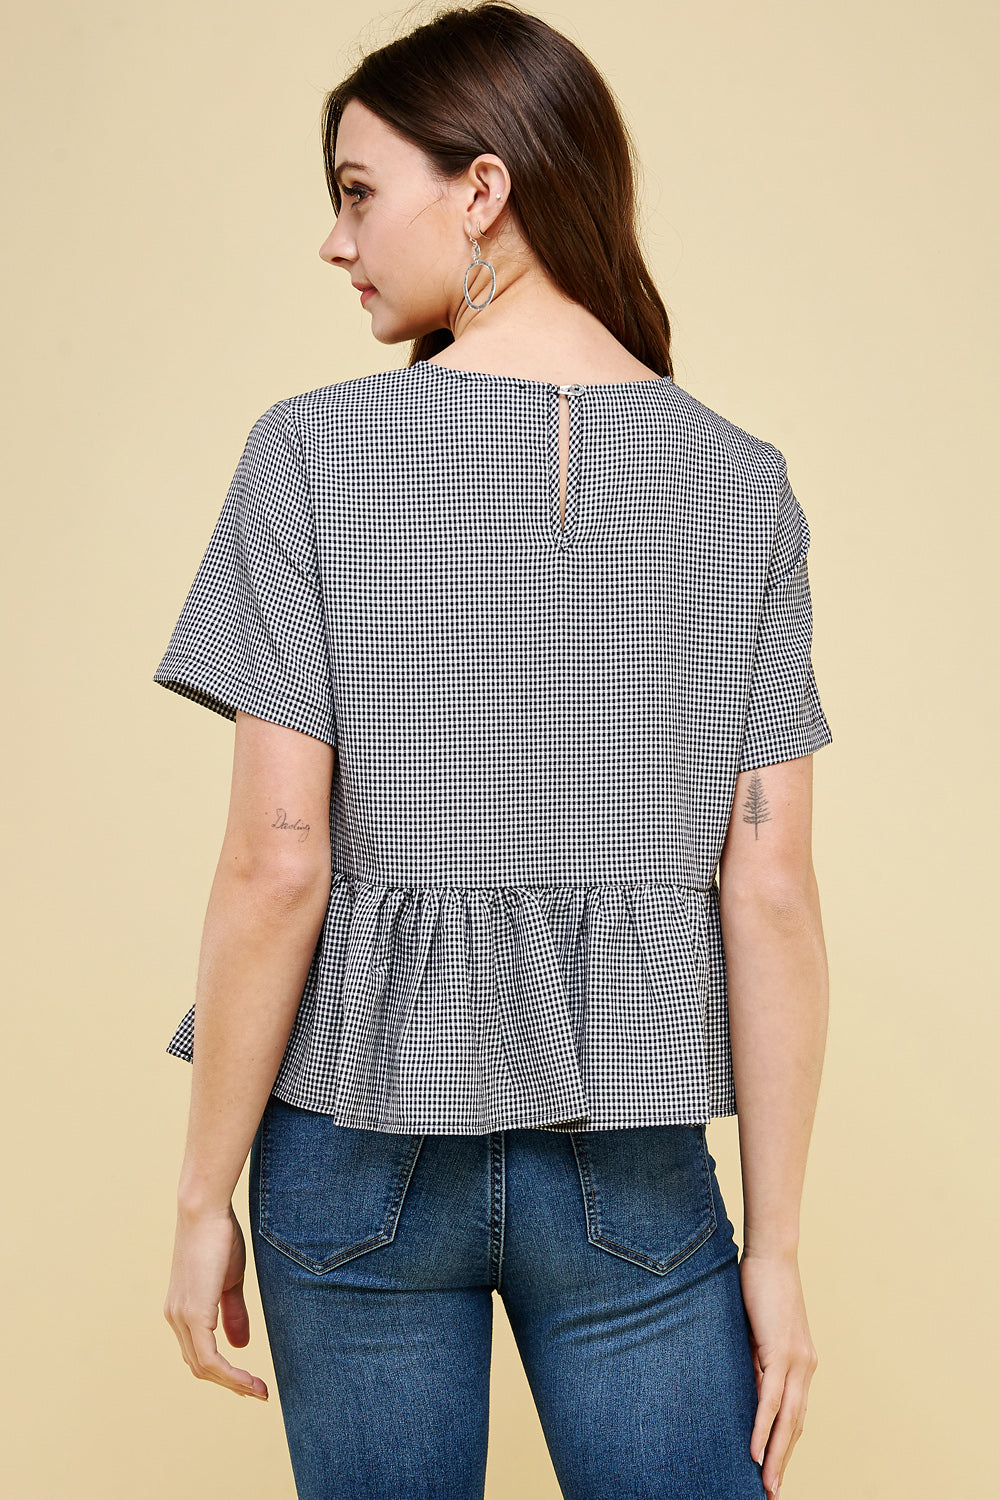 [$3/piece] Ruffle hemline plaid blouse top